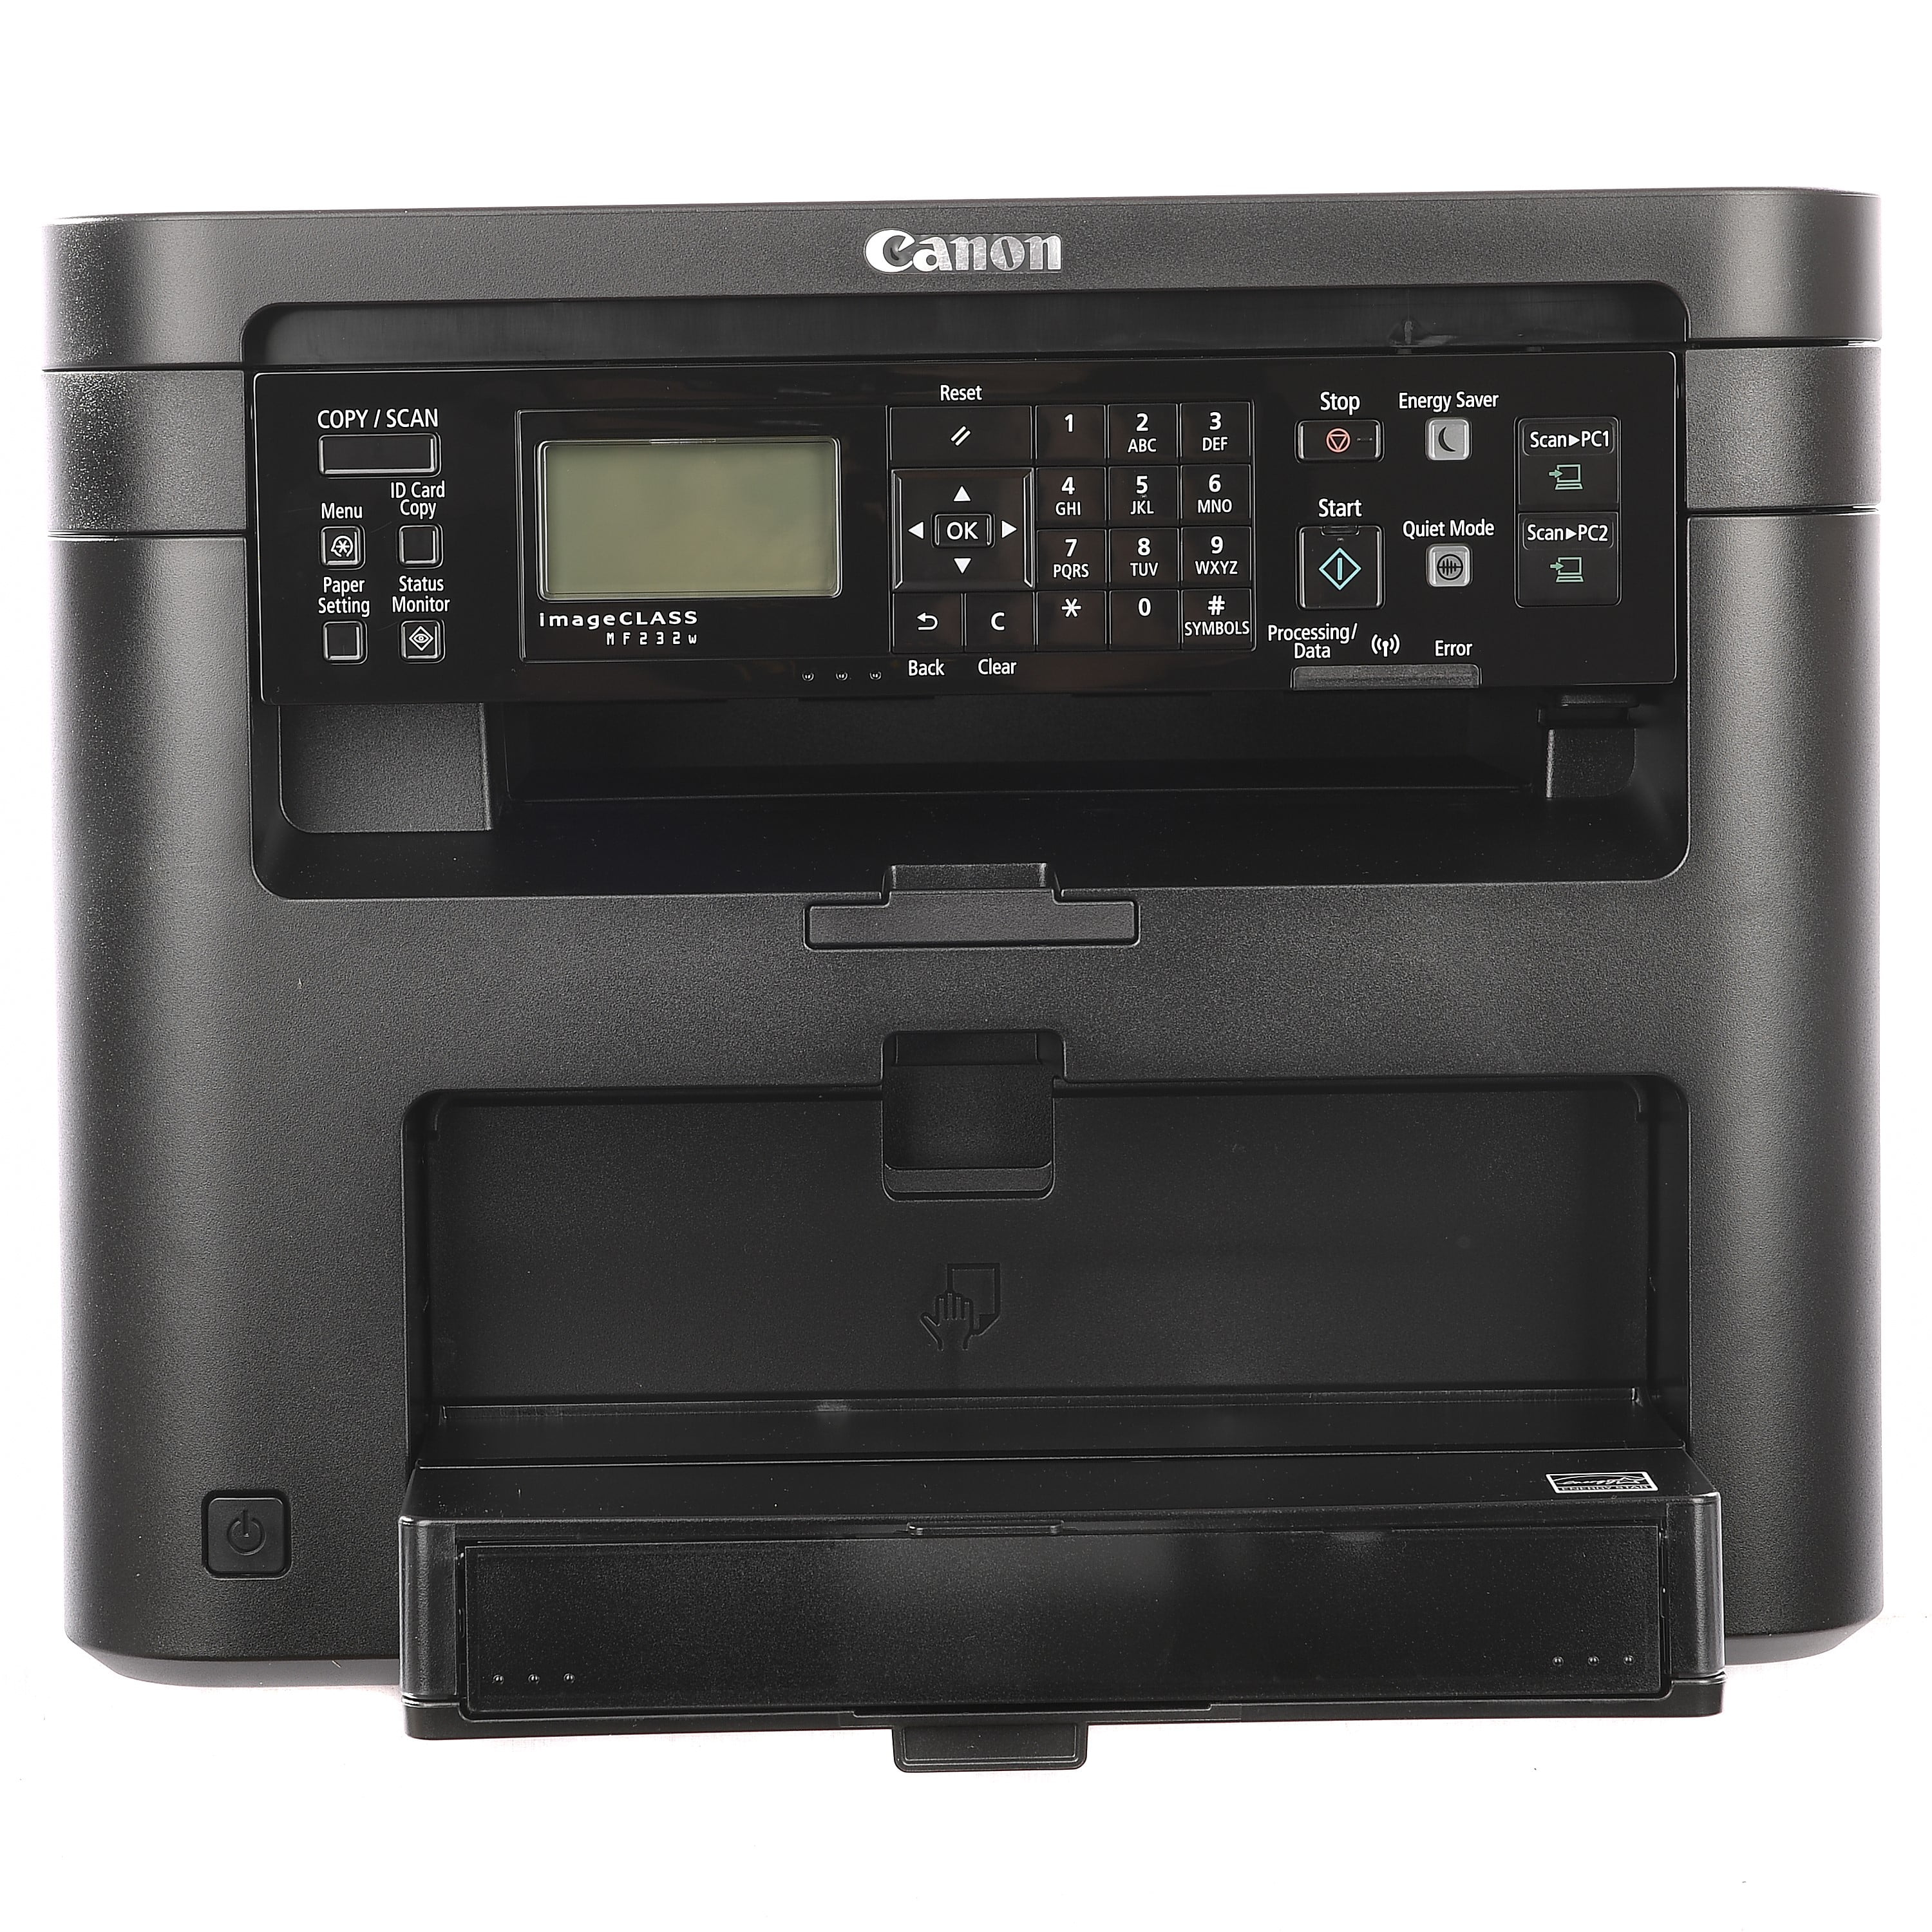 Canon imageCLASS MF232w Wireless Monochrome Laser Printer with